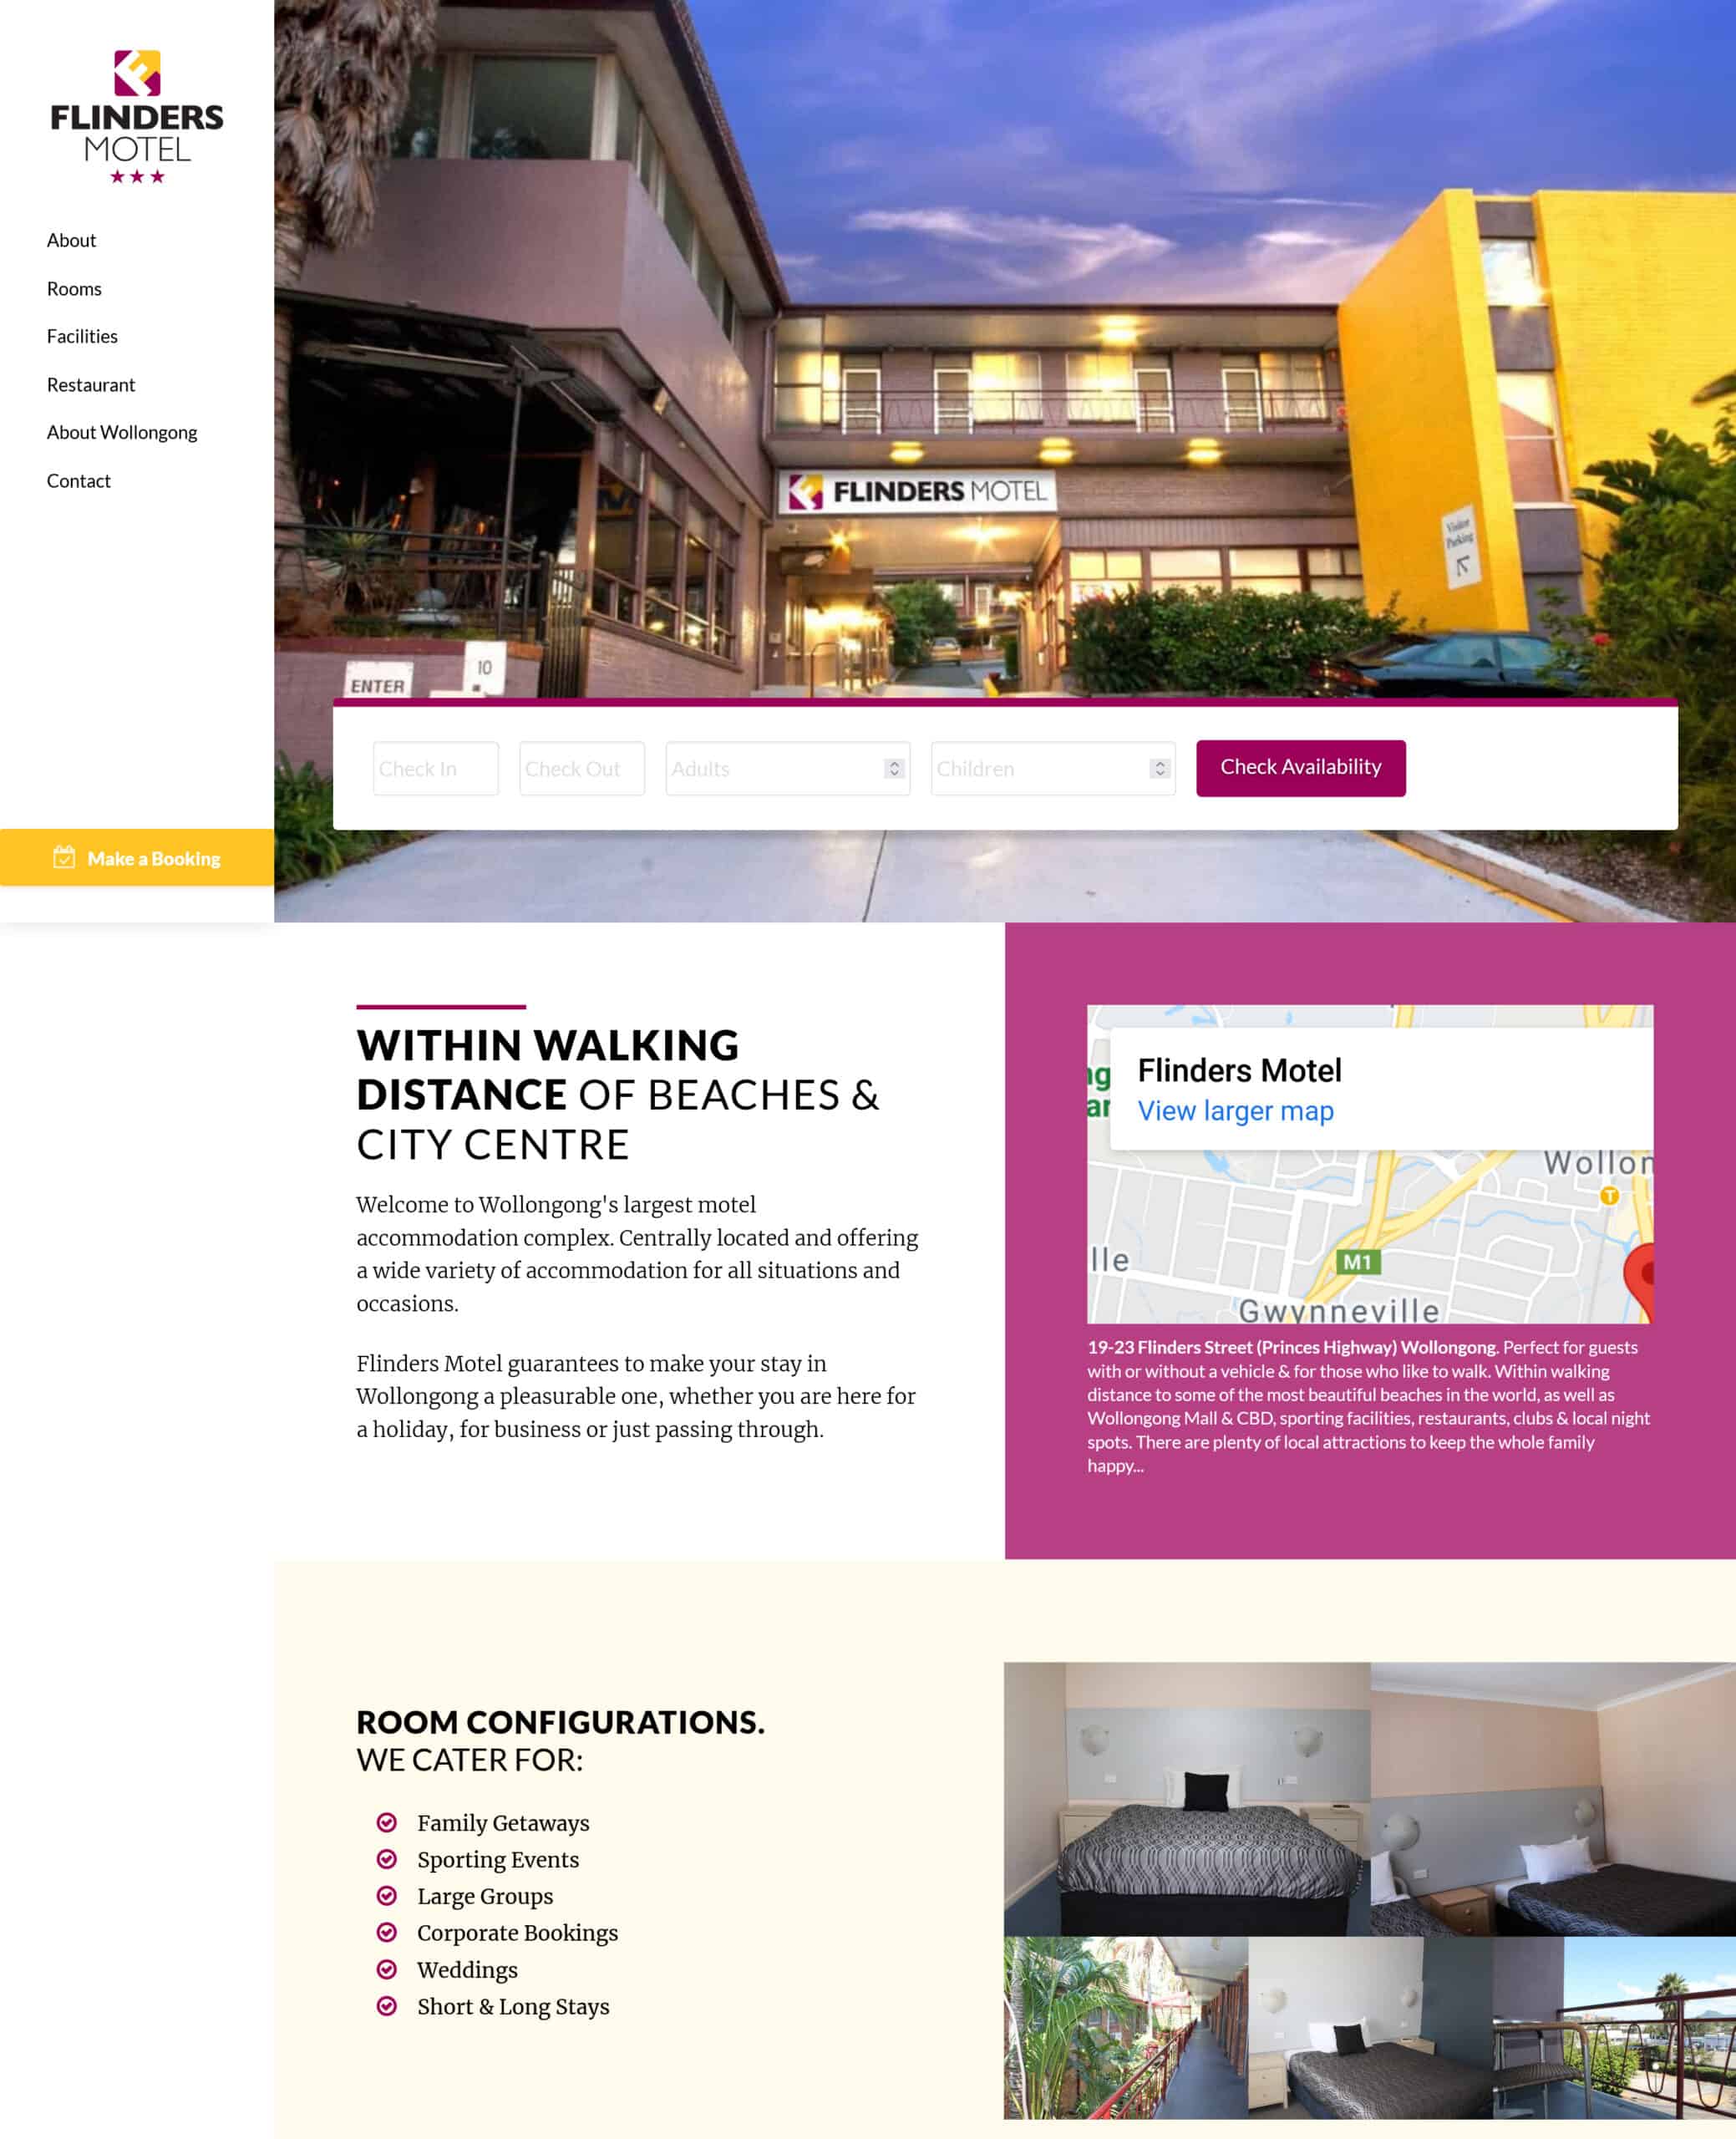 Flinders Motel Wollongong website design screenshot, desktop